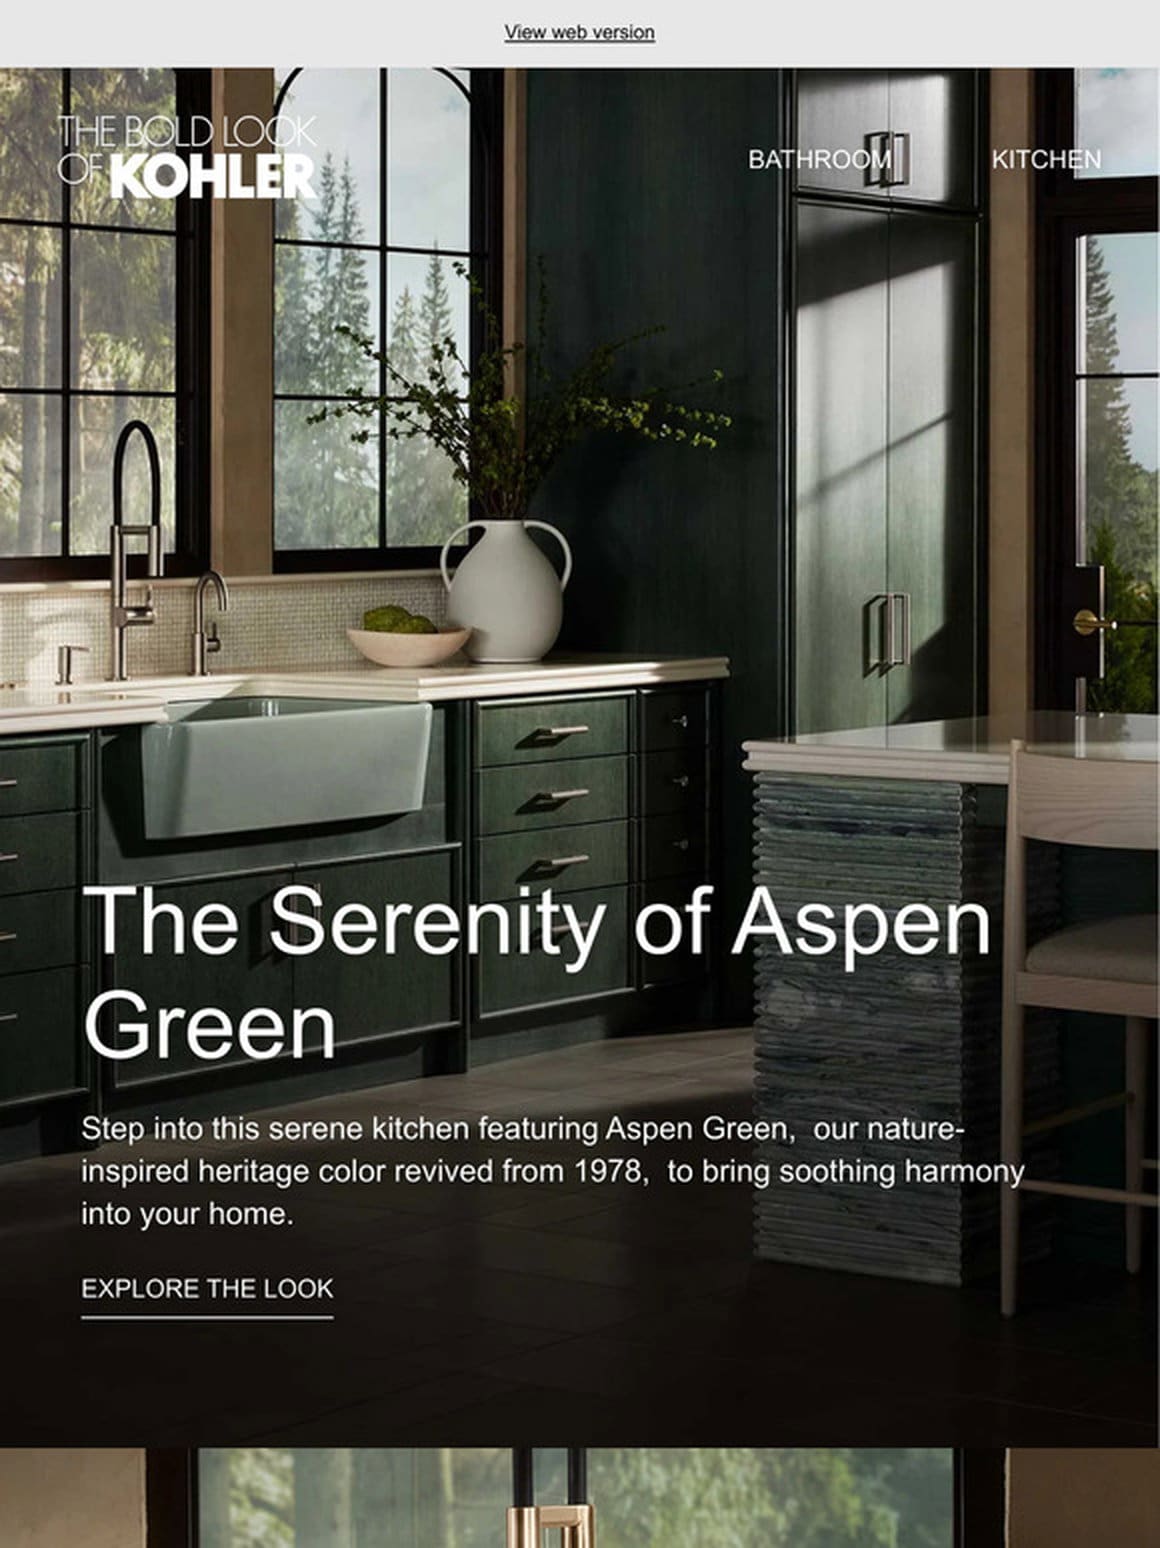 Explore the Soft Nature of Aspen Green